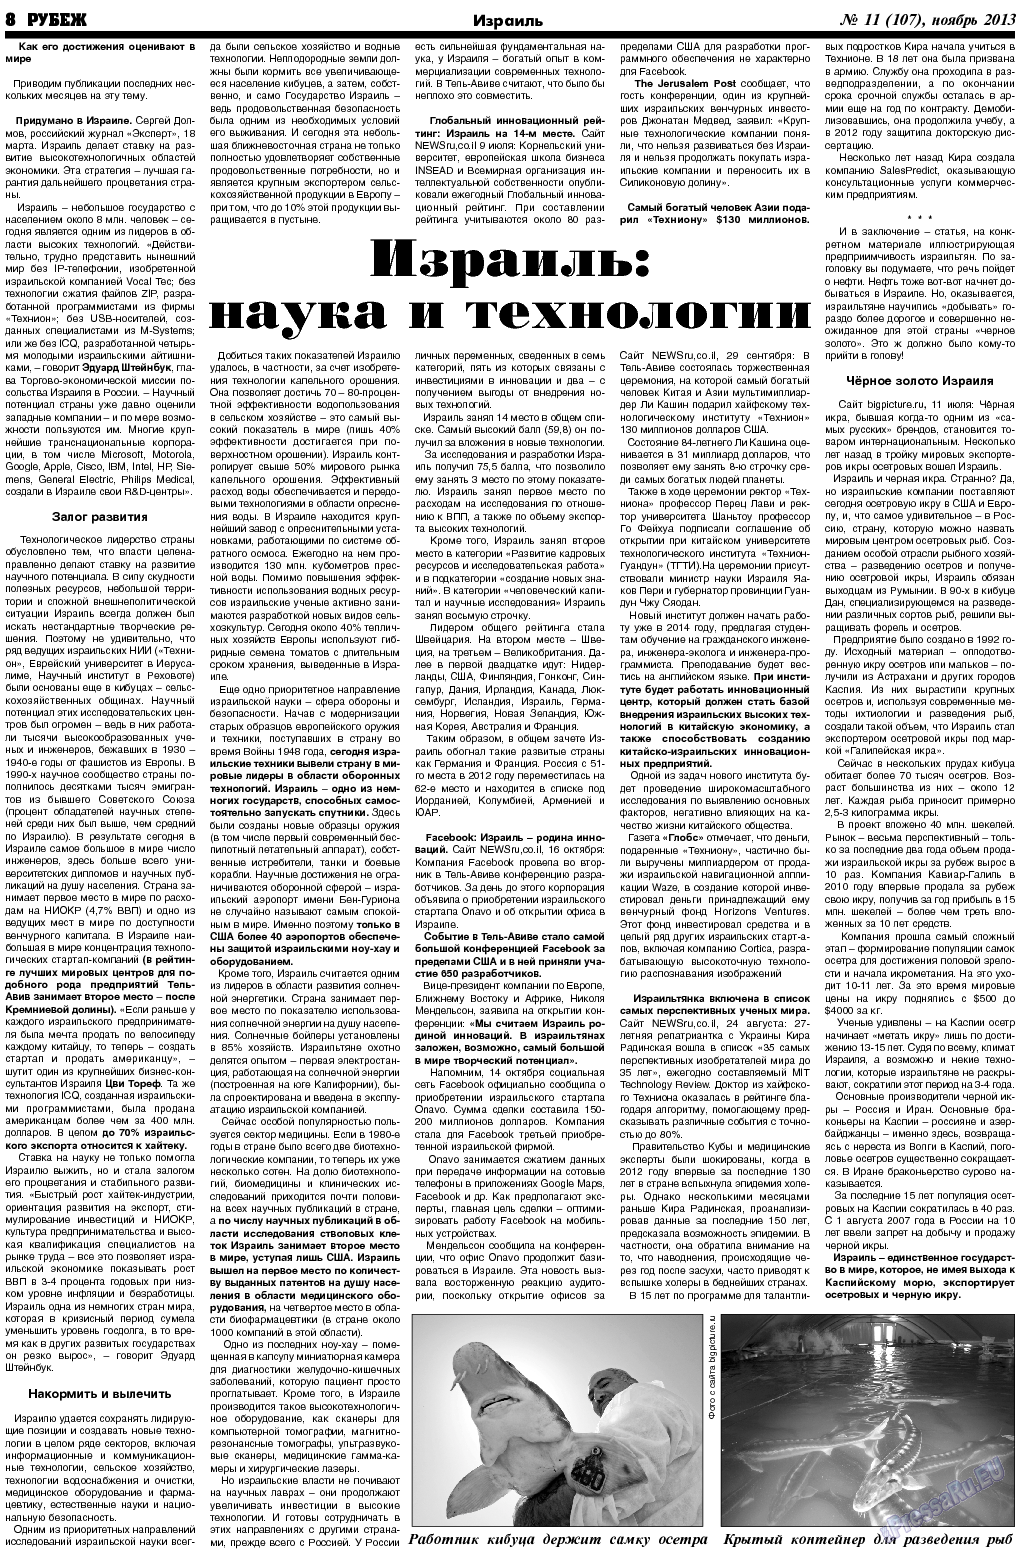 Рубеж, газета. 2013 №11 стр.8